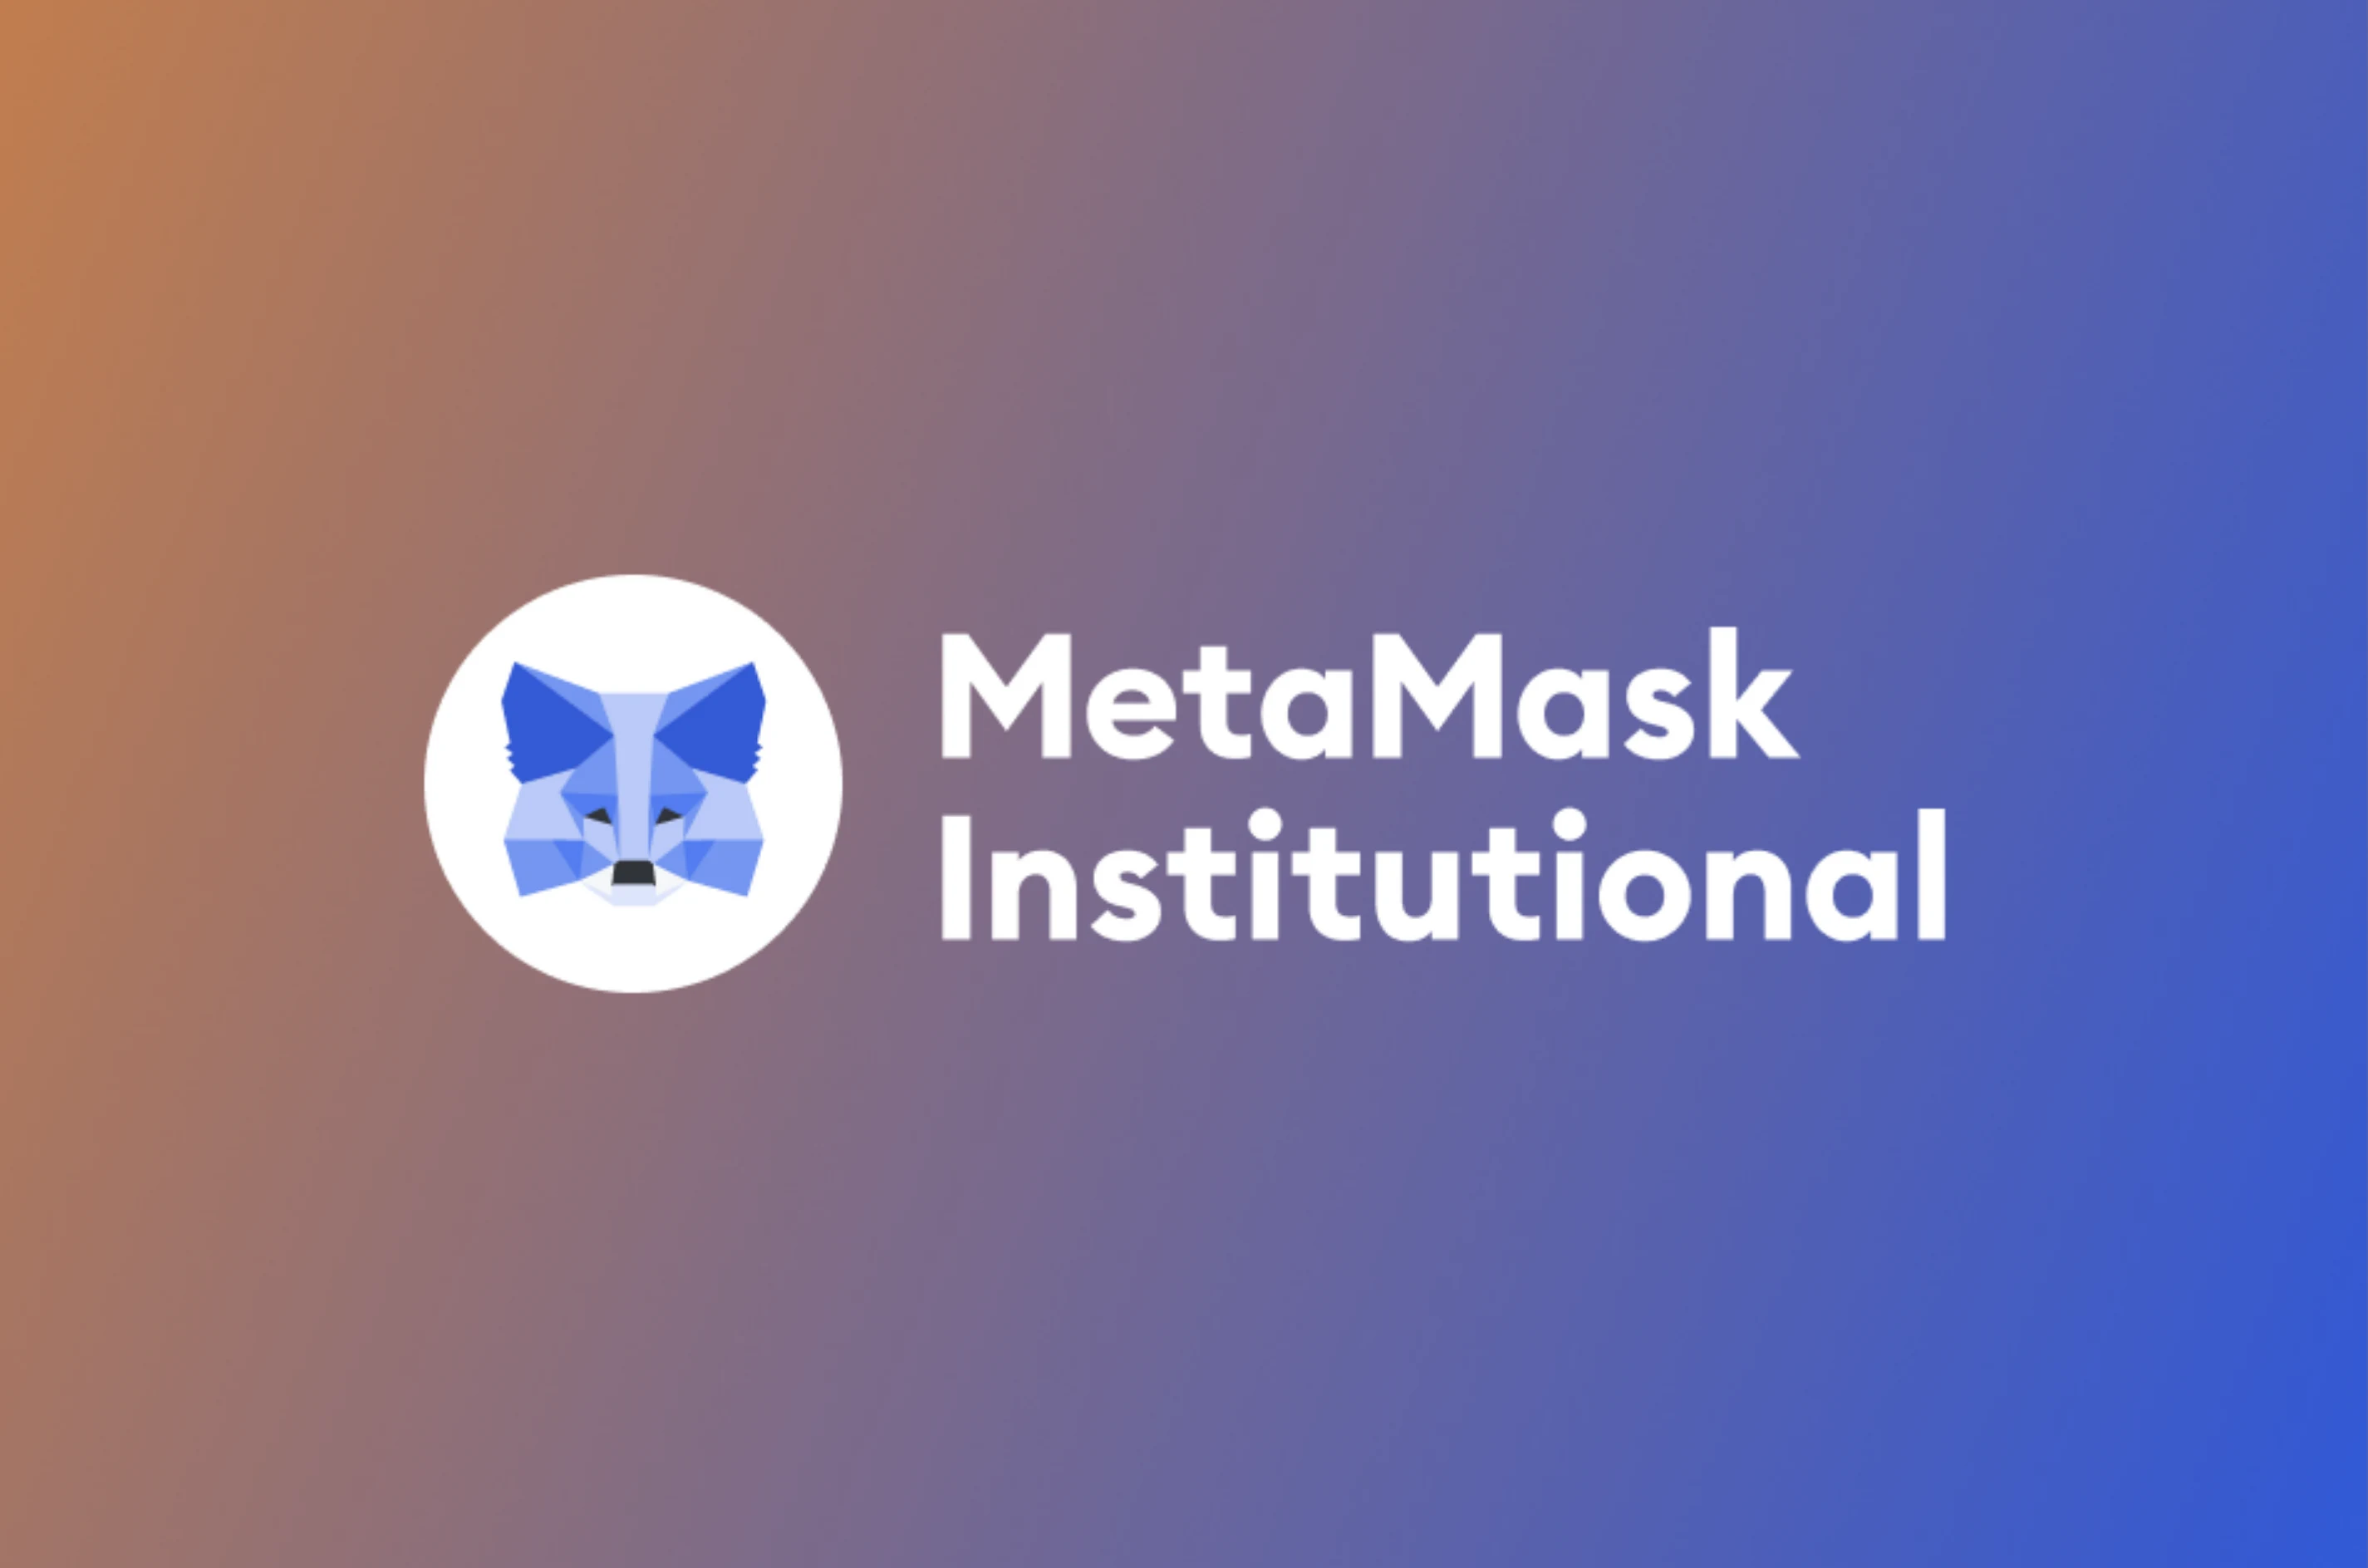 MetaMask Institutional